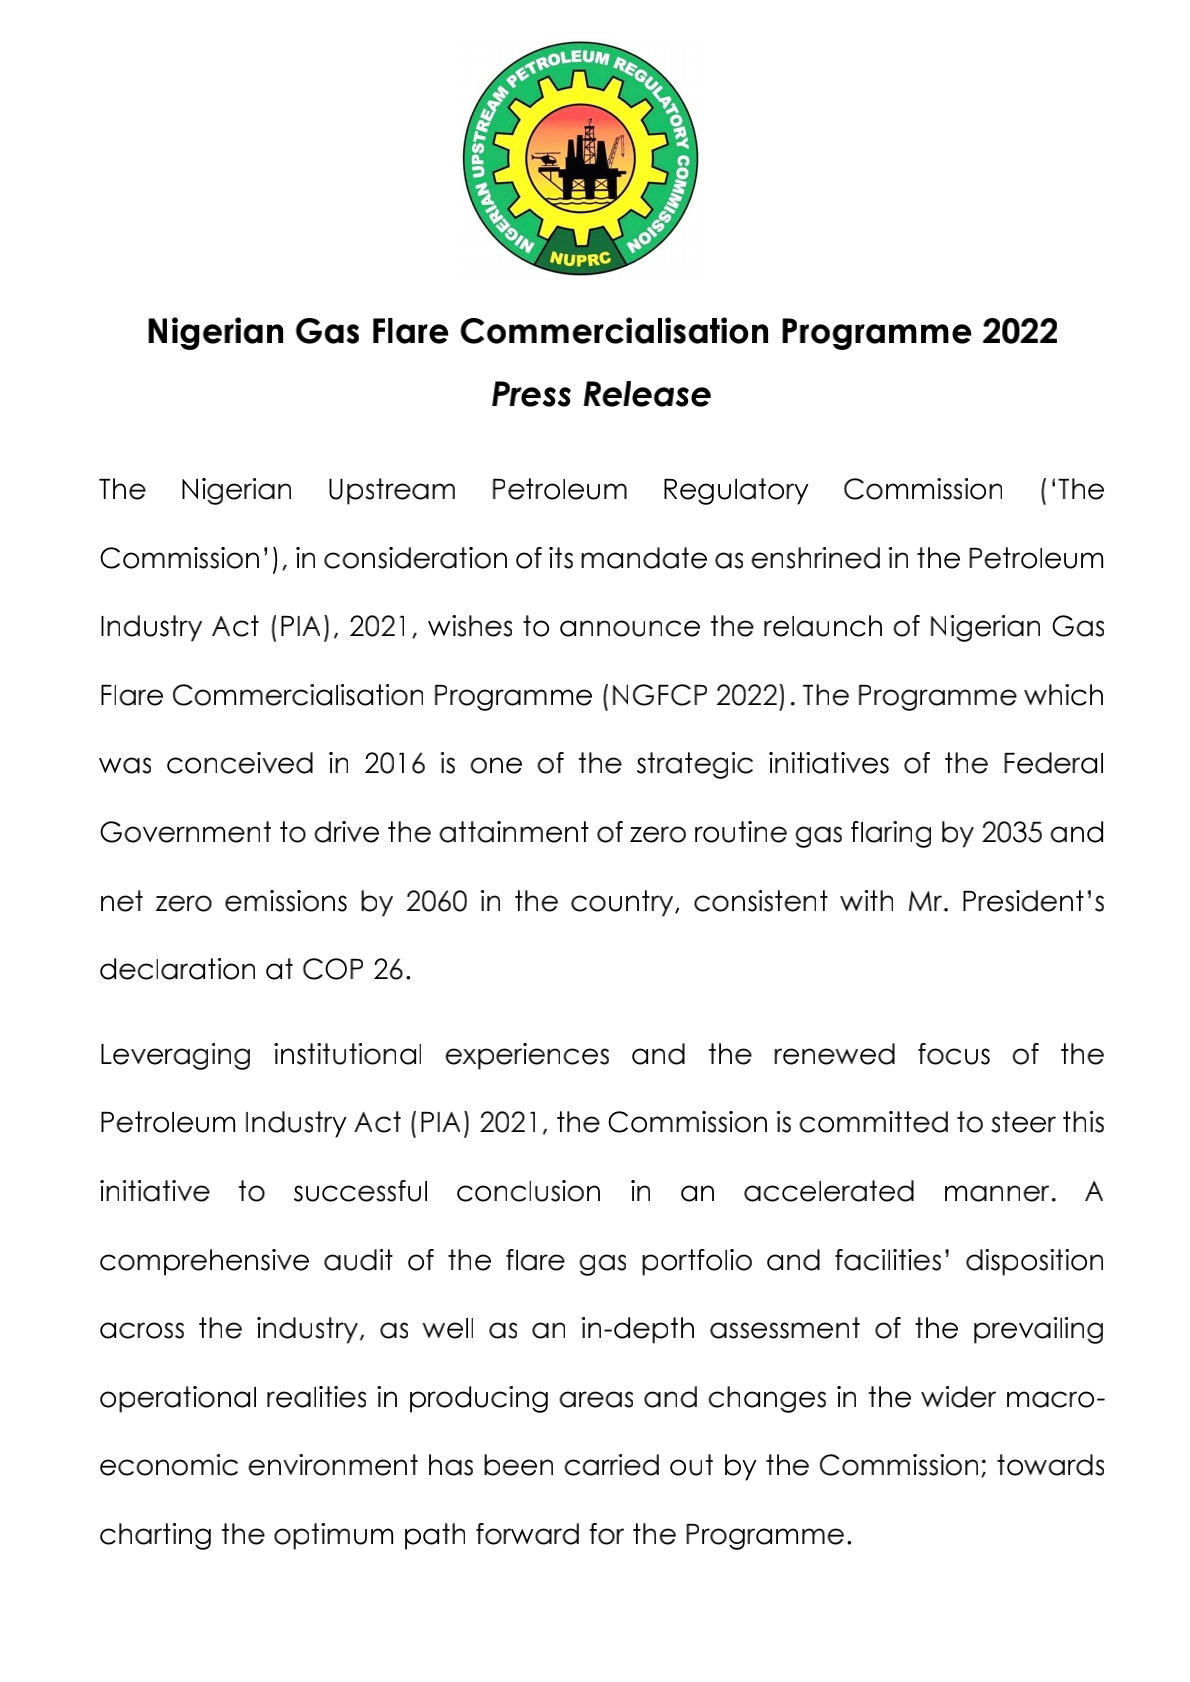 Nigerian Gas Flare Commercialisation Programme 2022: Press Release